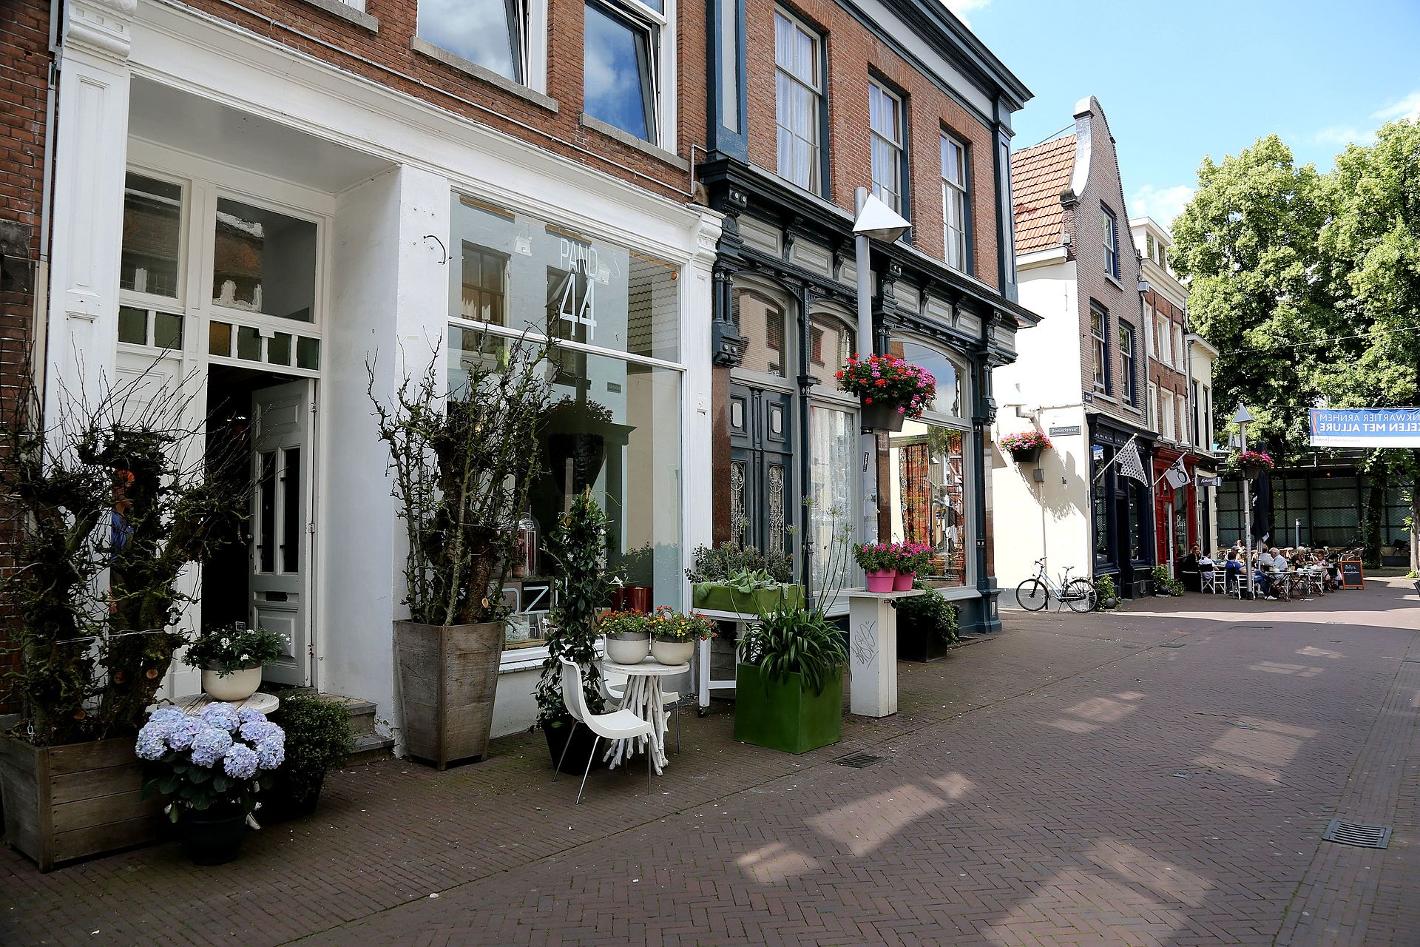 Foto 7straatjes in Arnhem, Zien, Mode, Kado, Wonen, Koffie, Lunch, Buurt - #1